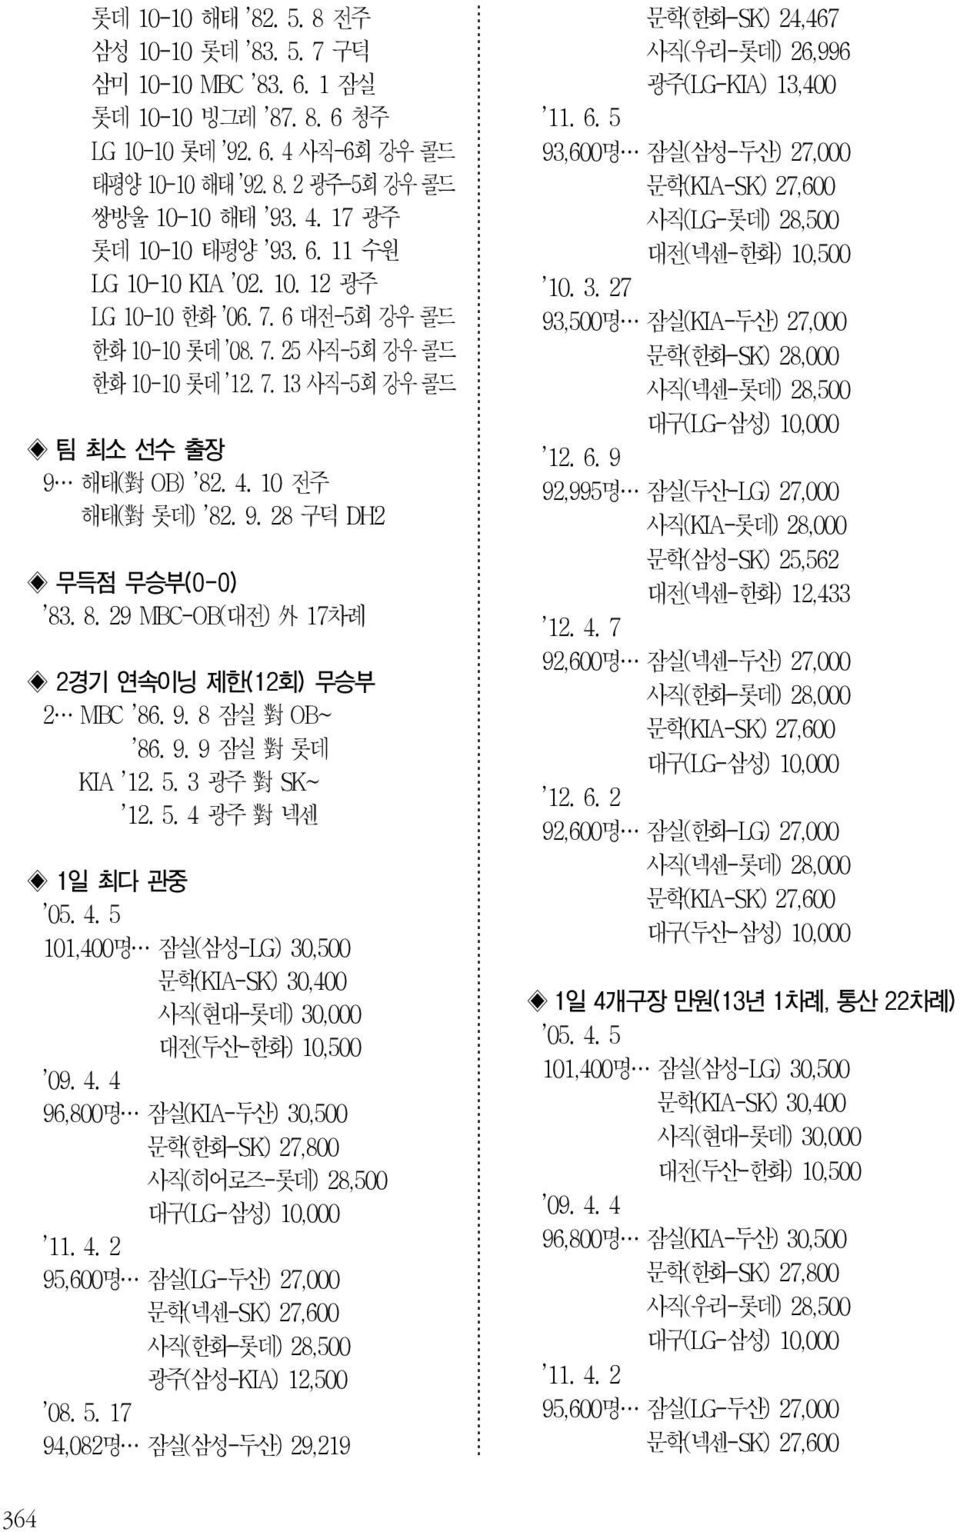 8. 29 MBC-OB( 대전 ) 外 17차례 2 경기 연속이닝 제한(12 회) 무승부 2 MBC 86. 9. 8 잠실 對 OB~ 86. 9. 9 잠실 對 롯데 KIA 12. 5. 3 광주 對 SK~ 12. 5. 4 